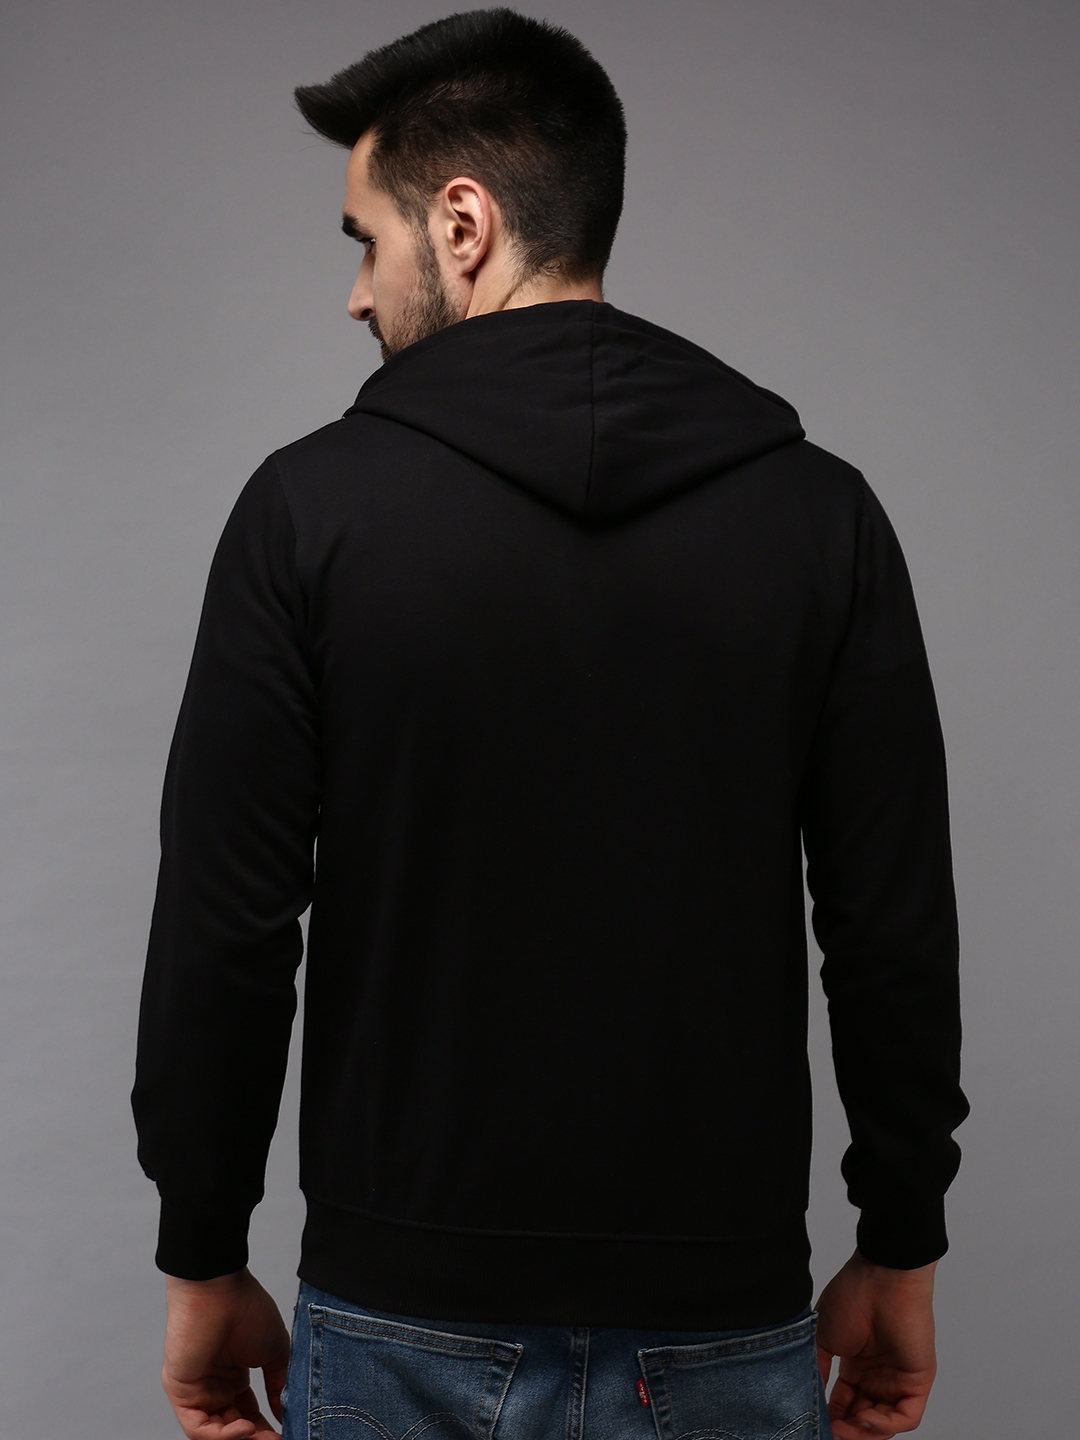 Men's Black Polyester Solid Hoodies